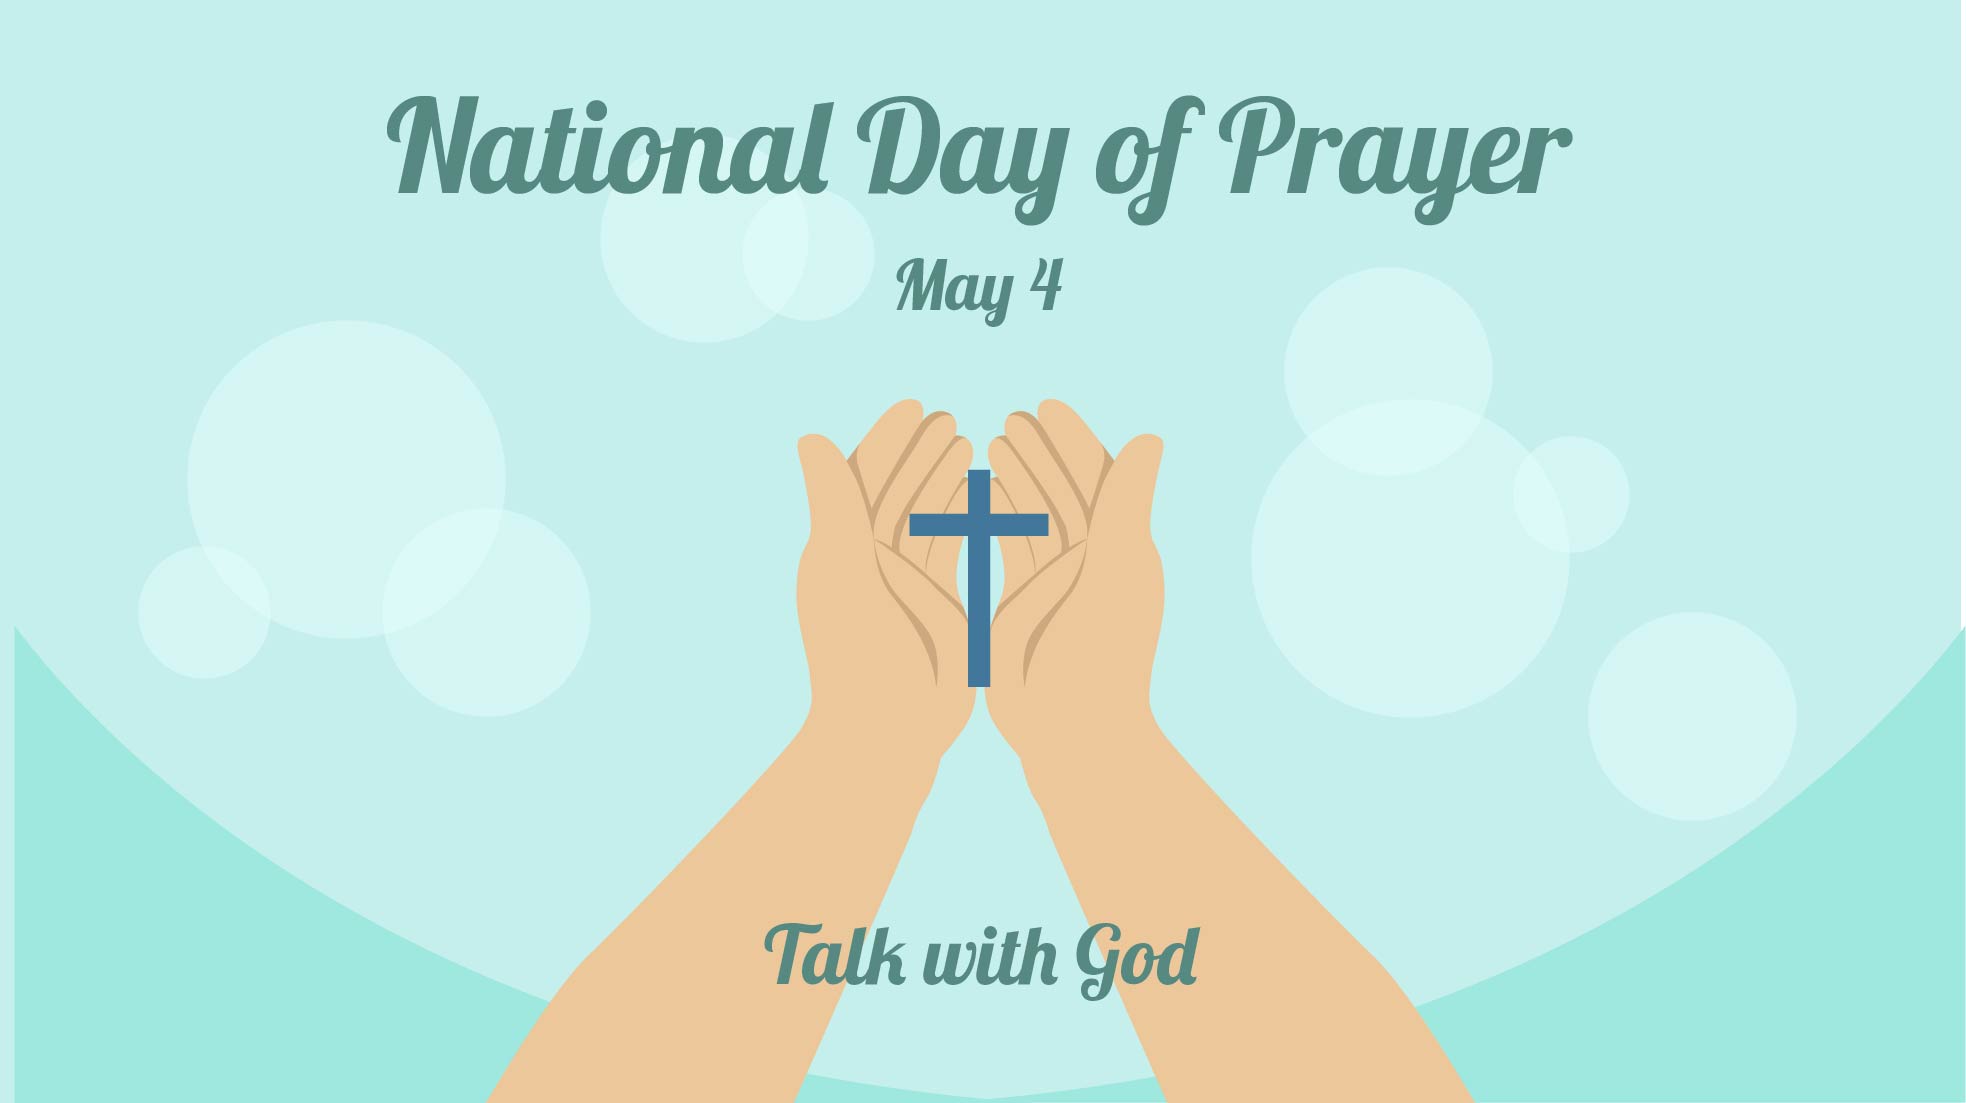 National Day of Prayer Flyer Background in EPS, JPG, SVG, PNG